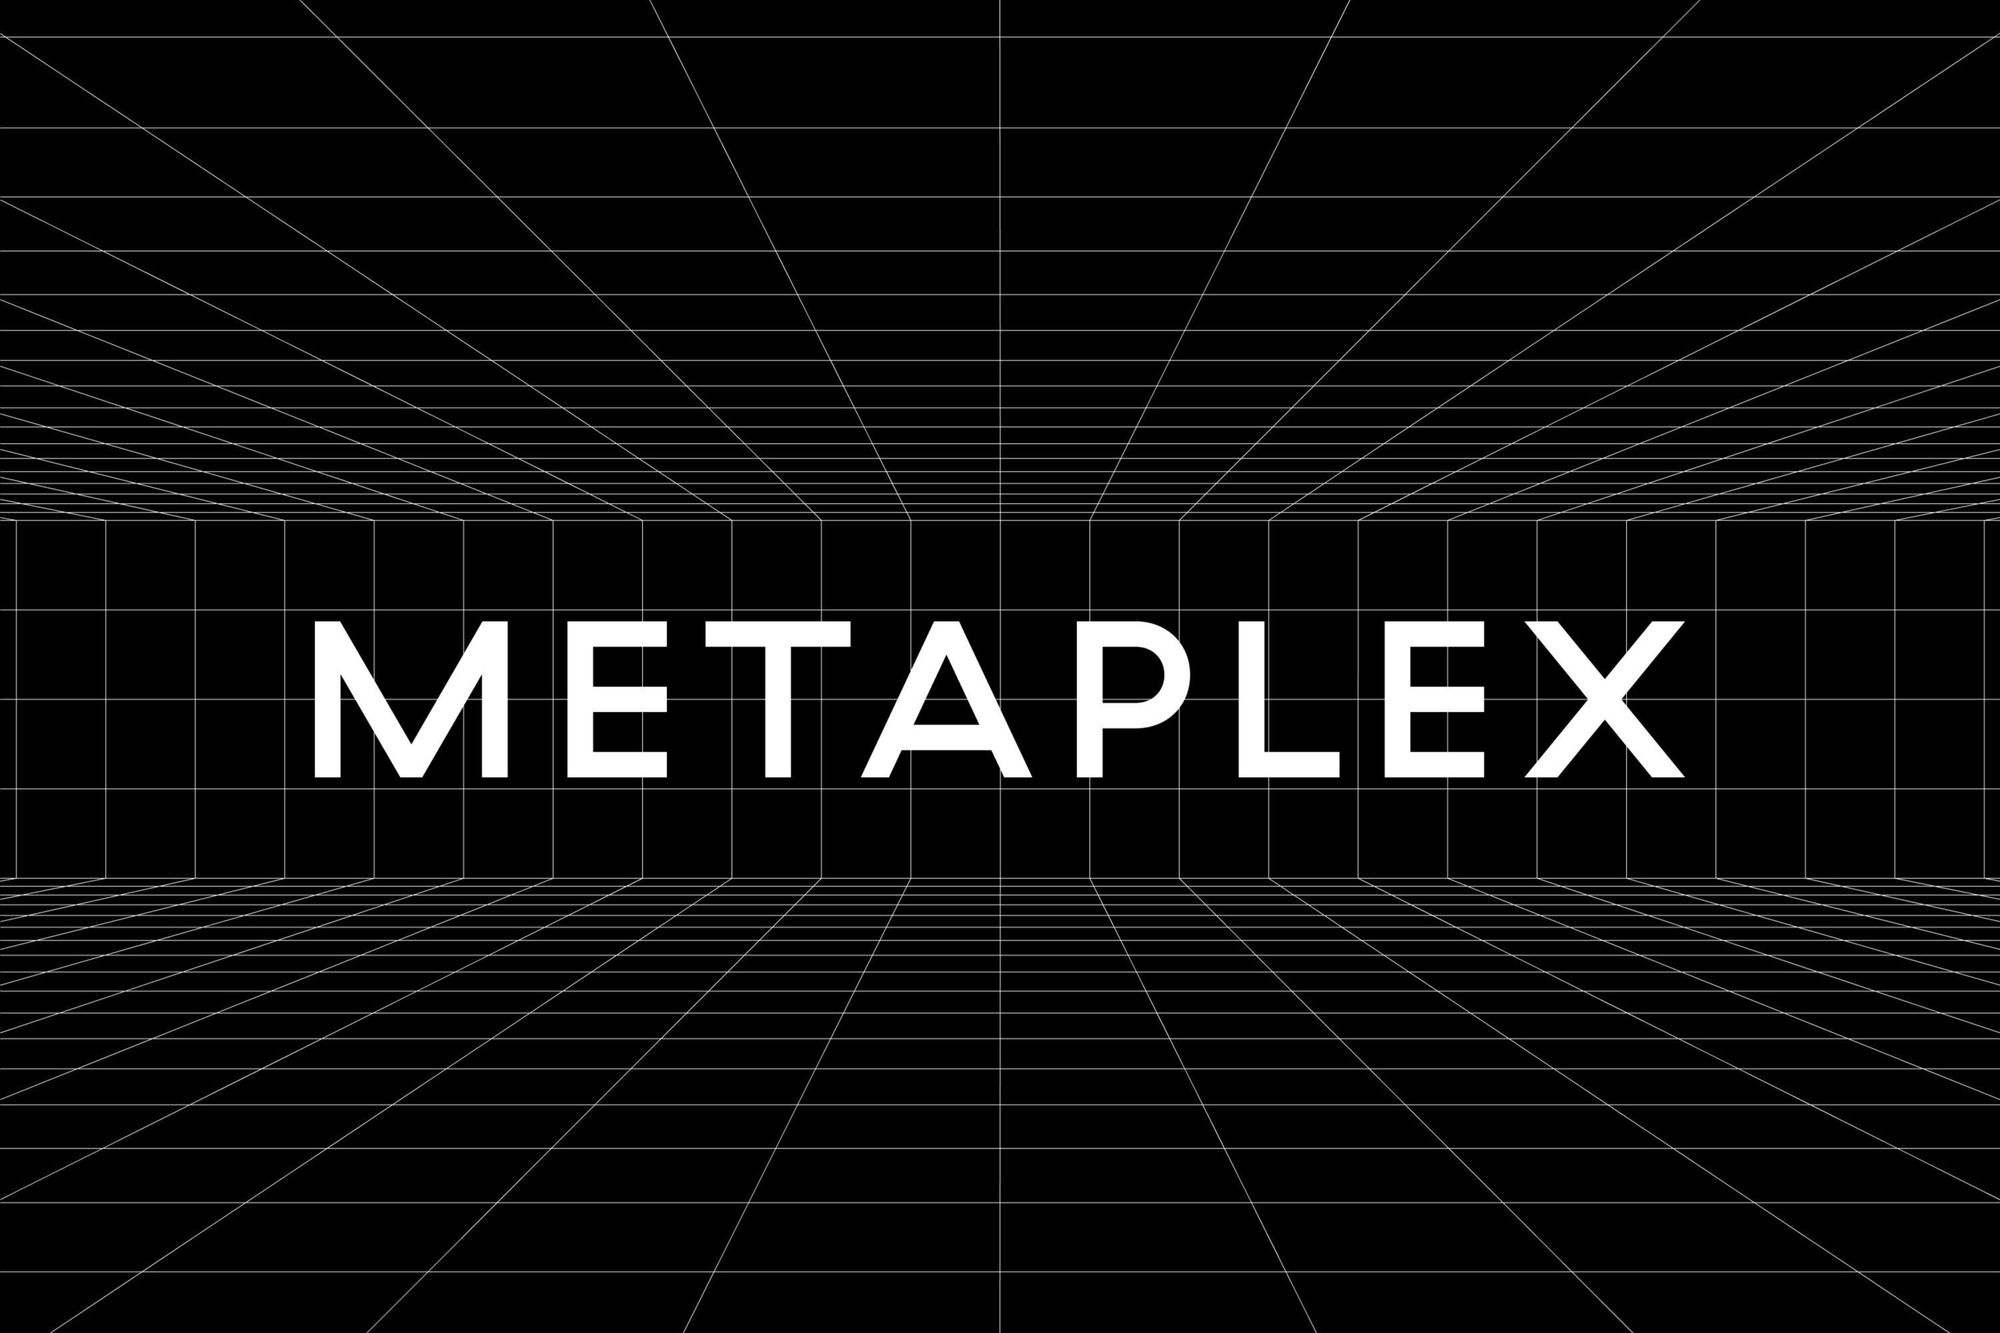 Metaplex Takes Steps to Adapt to Community Feedback